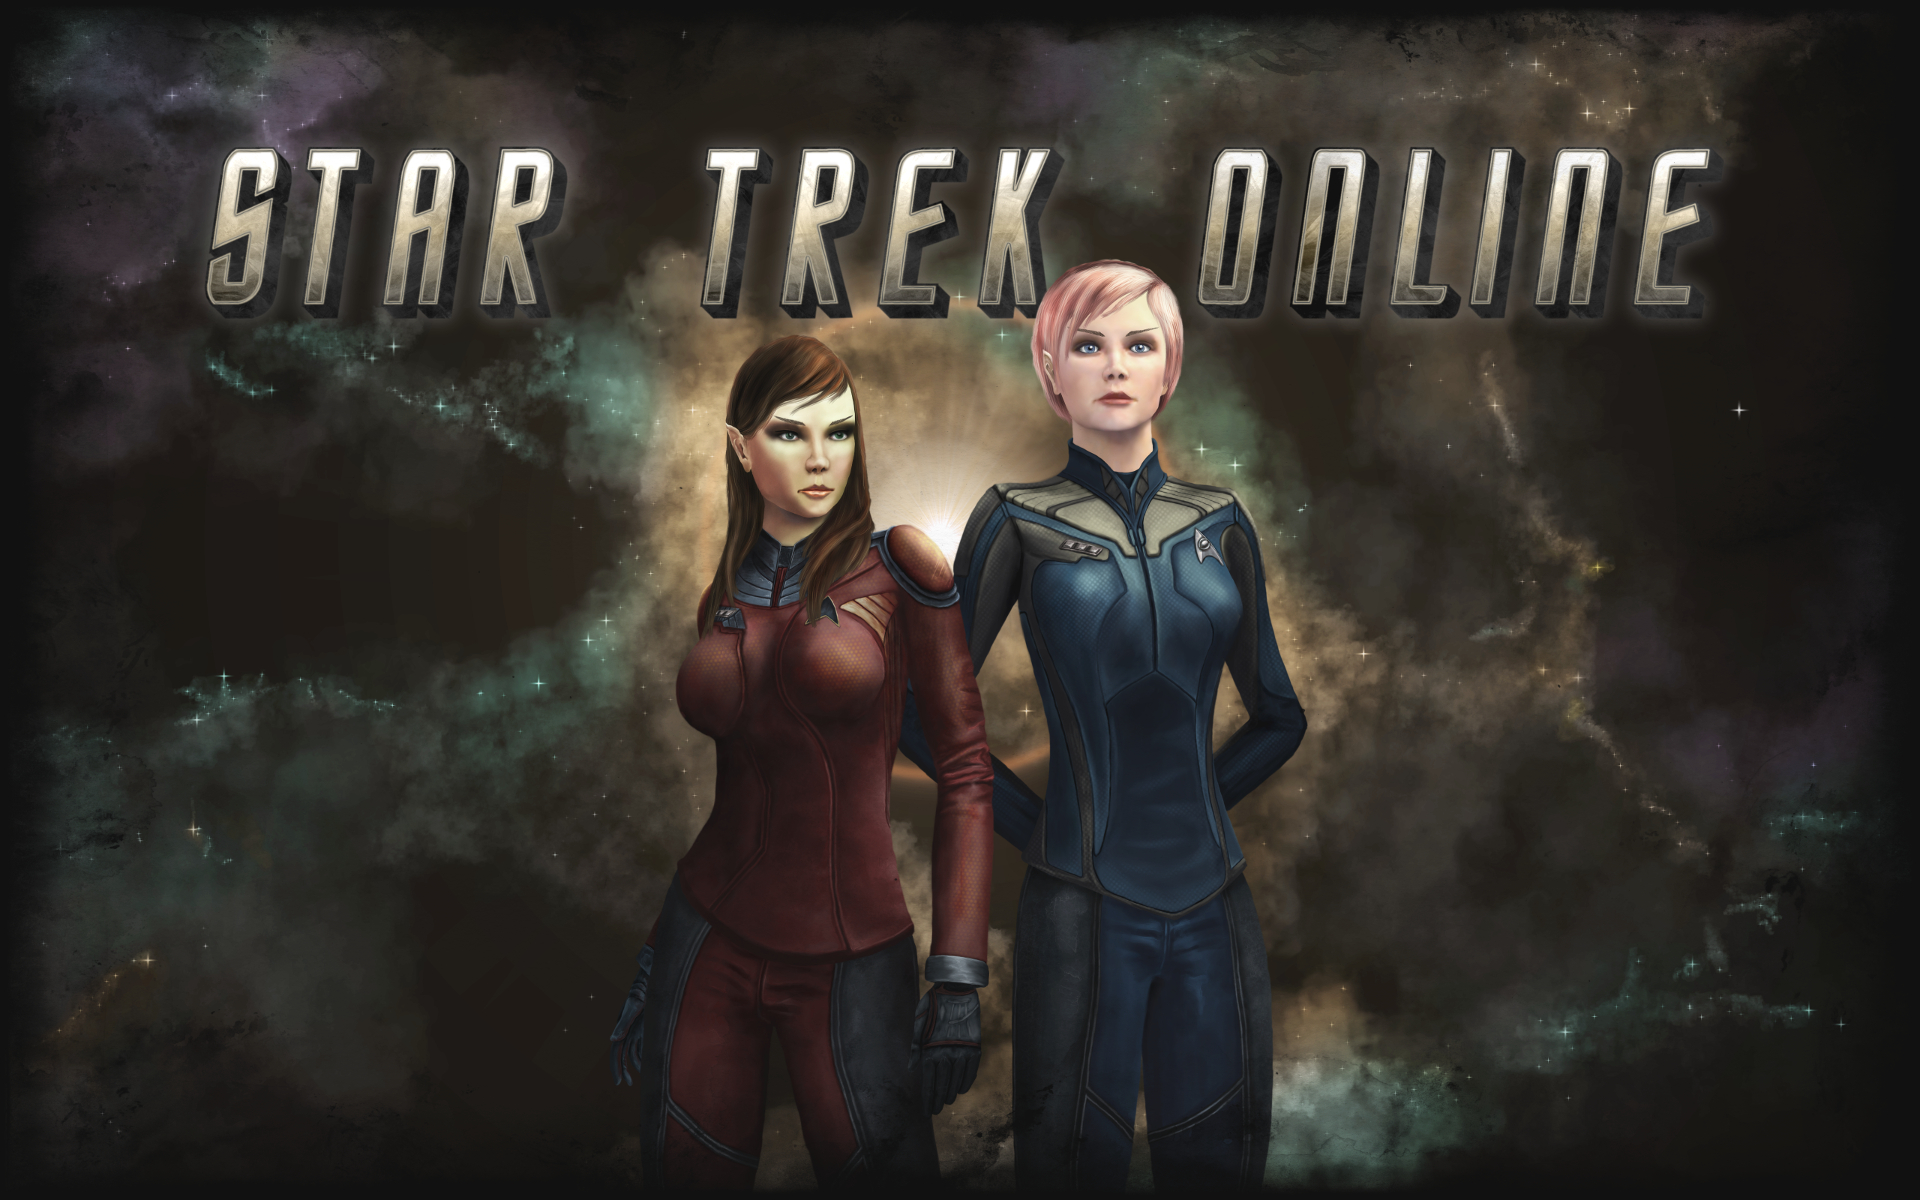 Star Trek Online Wallpaper by xGreatCthulhux on DeviantArt